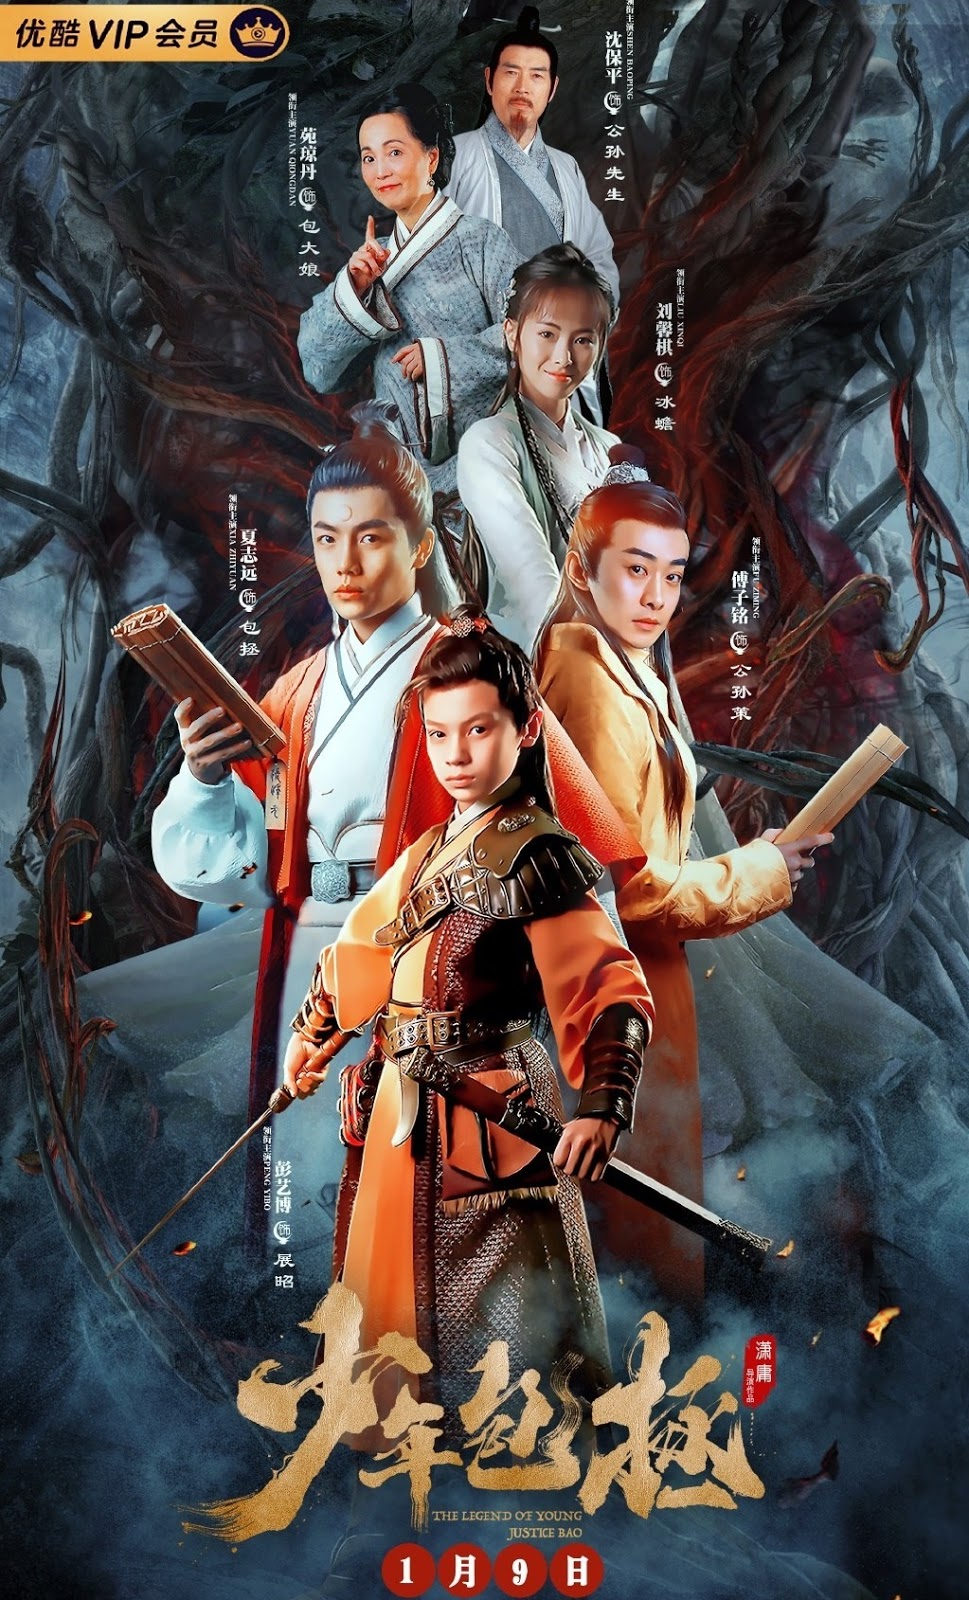 Poster Phim Thiếu Niên Bao Chửng (The Legend of Young Justice Bao)